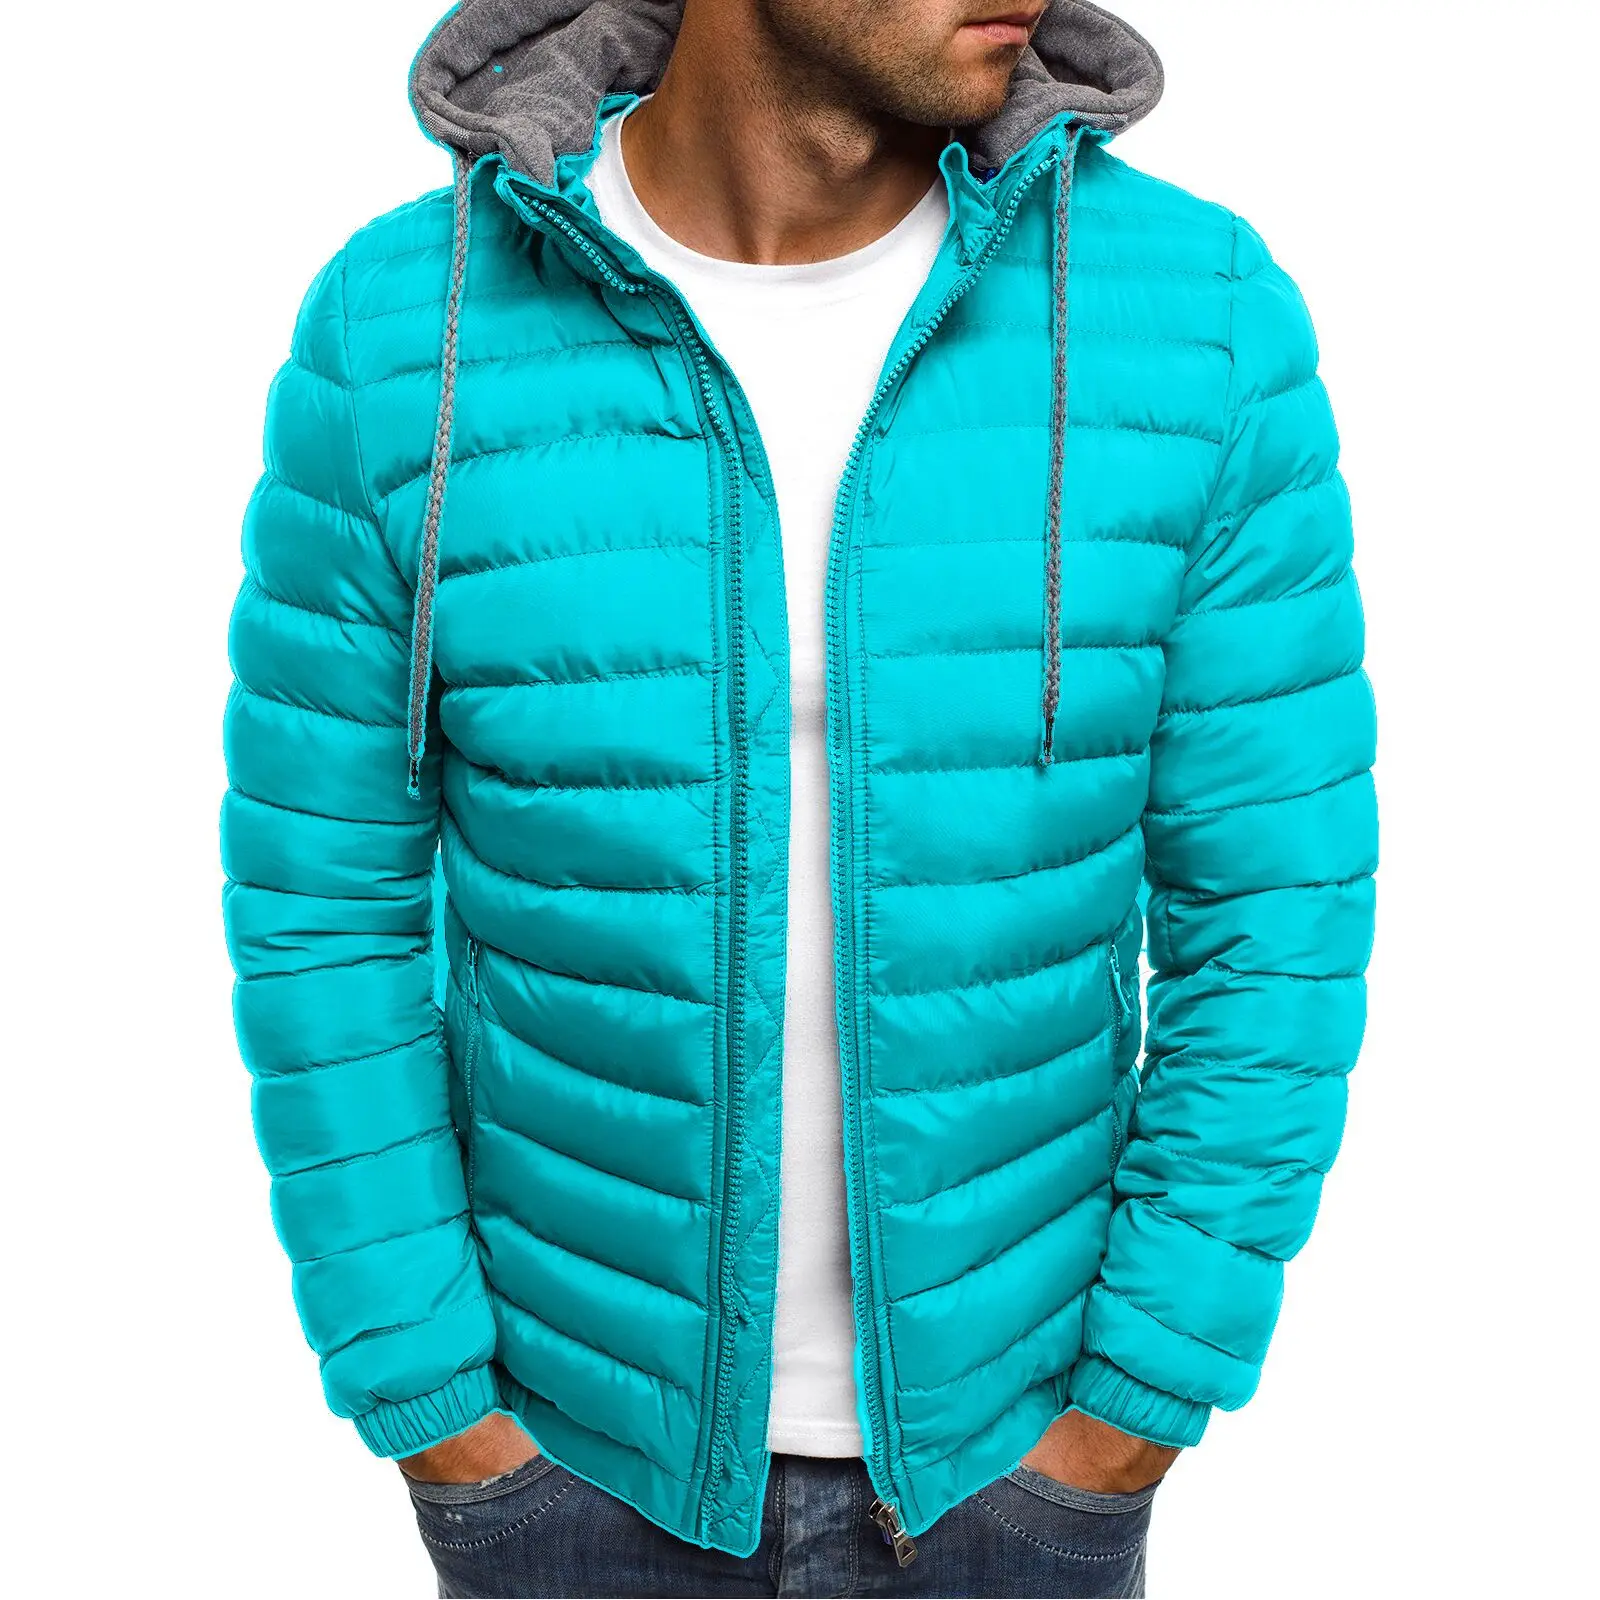 khaki parka NEW Winter Thick Warm Jacket Outerwear Top Oversize Down Coat Men Detachable Hat Padded Hooded Cardigan Drawstring Coat mens parka coats with fur hood